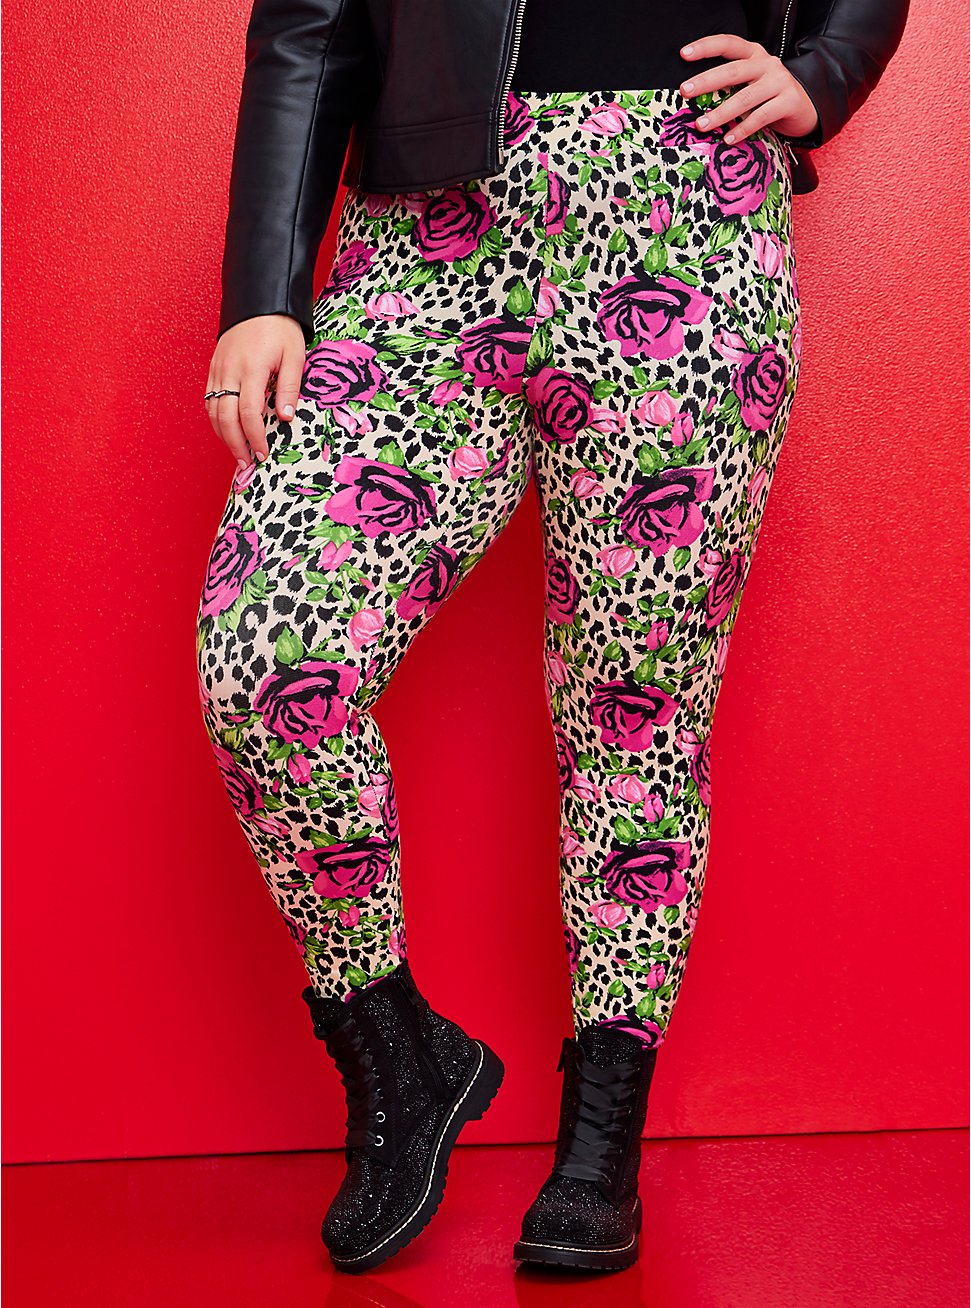 Plus Size Betsey Johnson Legging - Bright Rose & Leopard, MULTI, hi-res